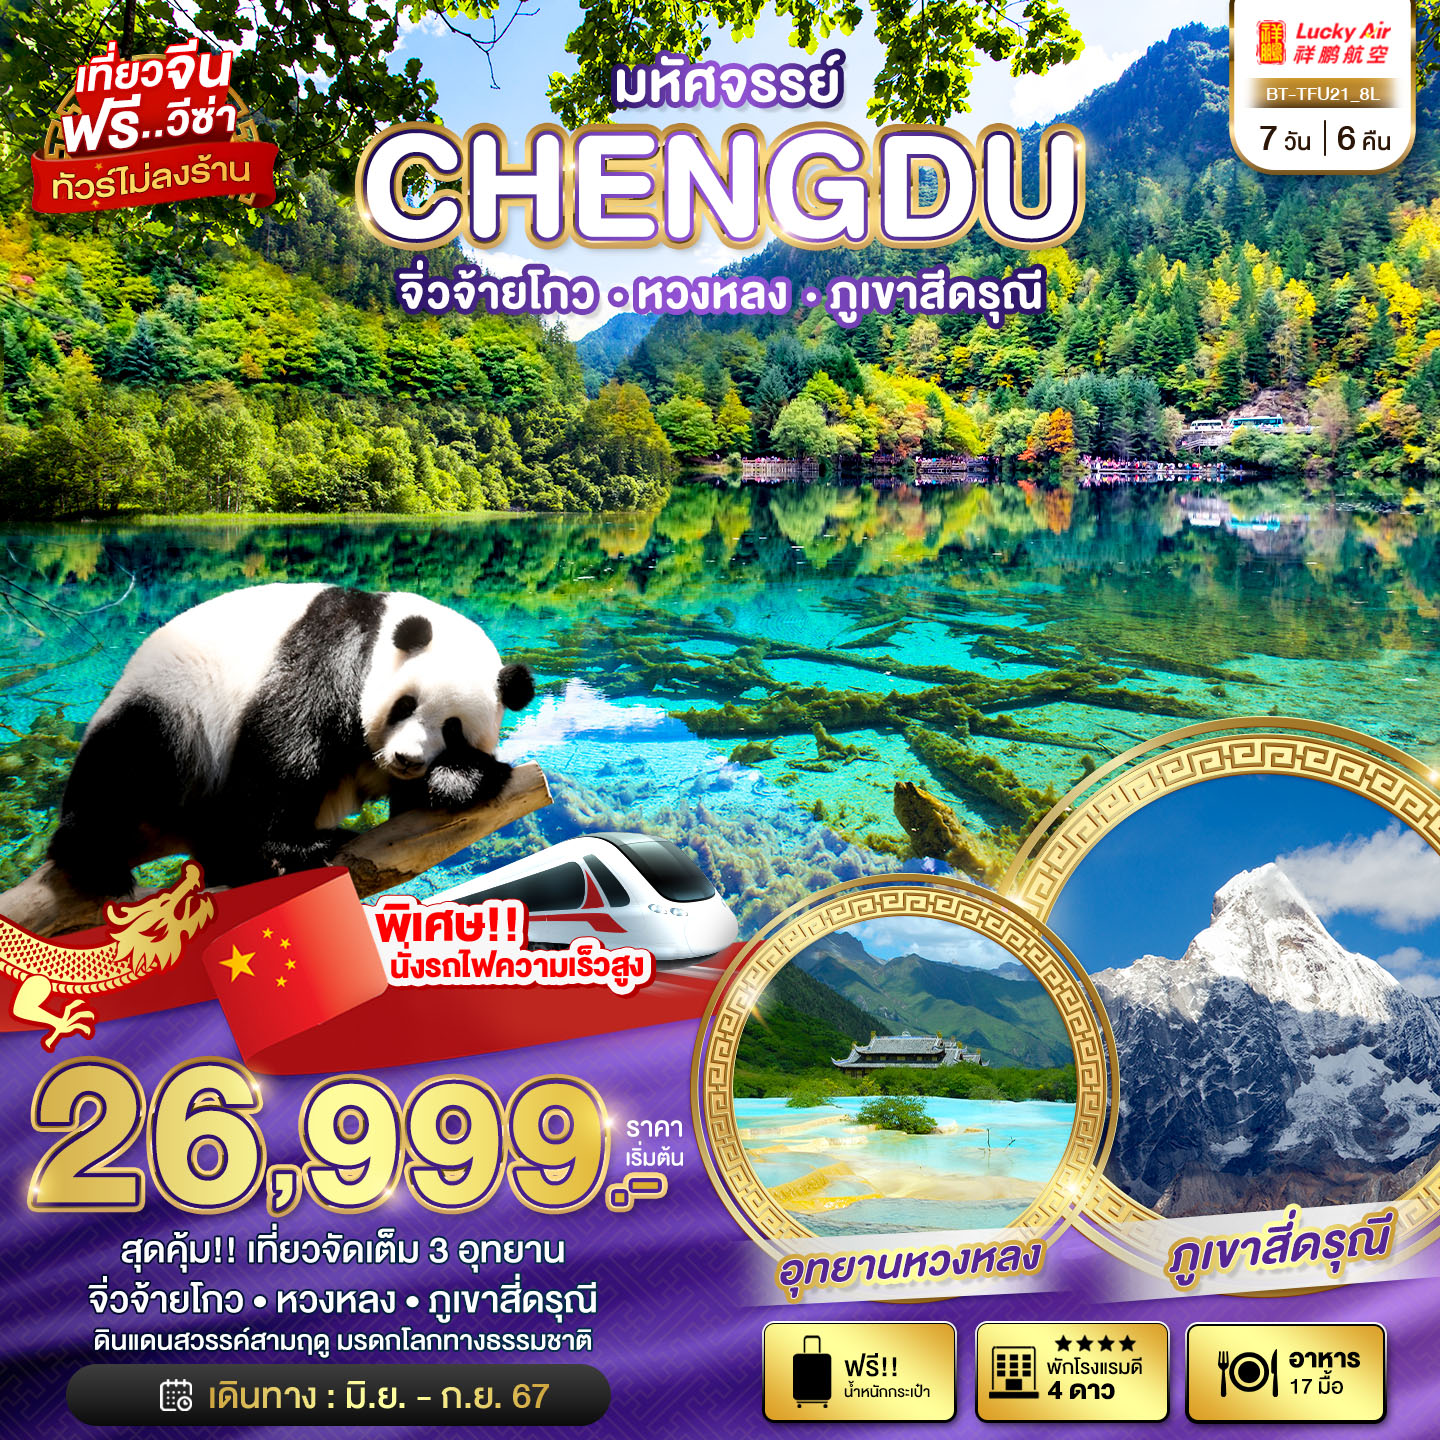 CHENGDU เฉิงตู จิ่วจ้ายโกว หวงหลง ภูเขาสีดรุณี 7 วัน 6 คืน เดินทาง มิถุนายน - กันยายน 67 เริ่มต้น 26,999.- Lucky Air (8L)